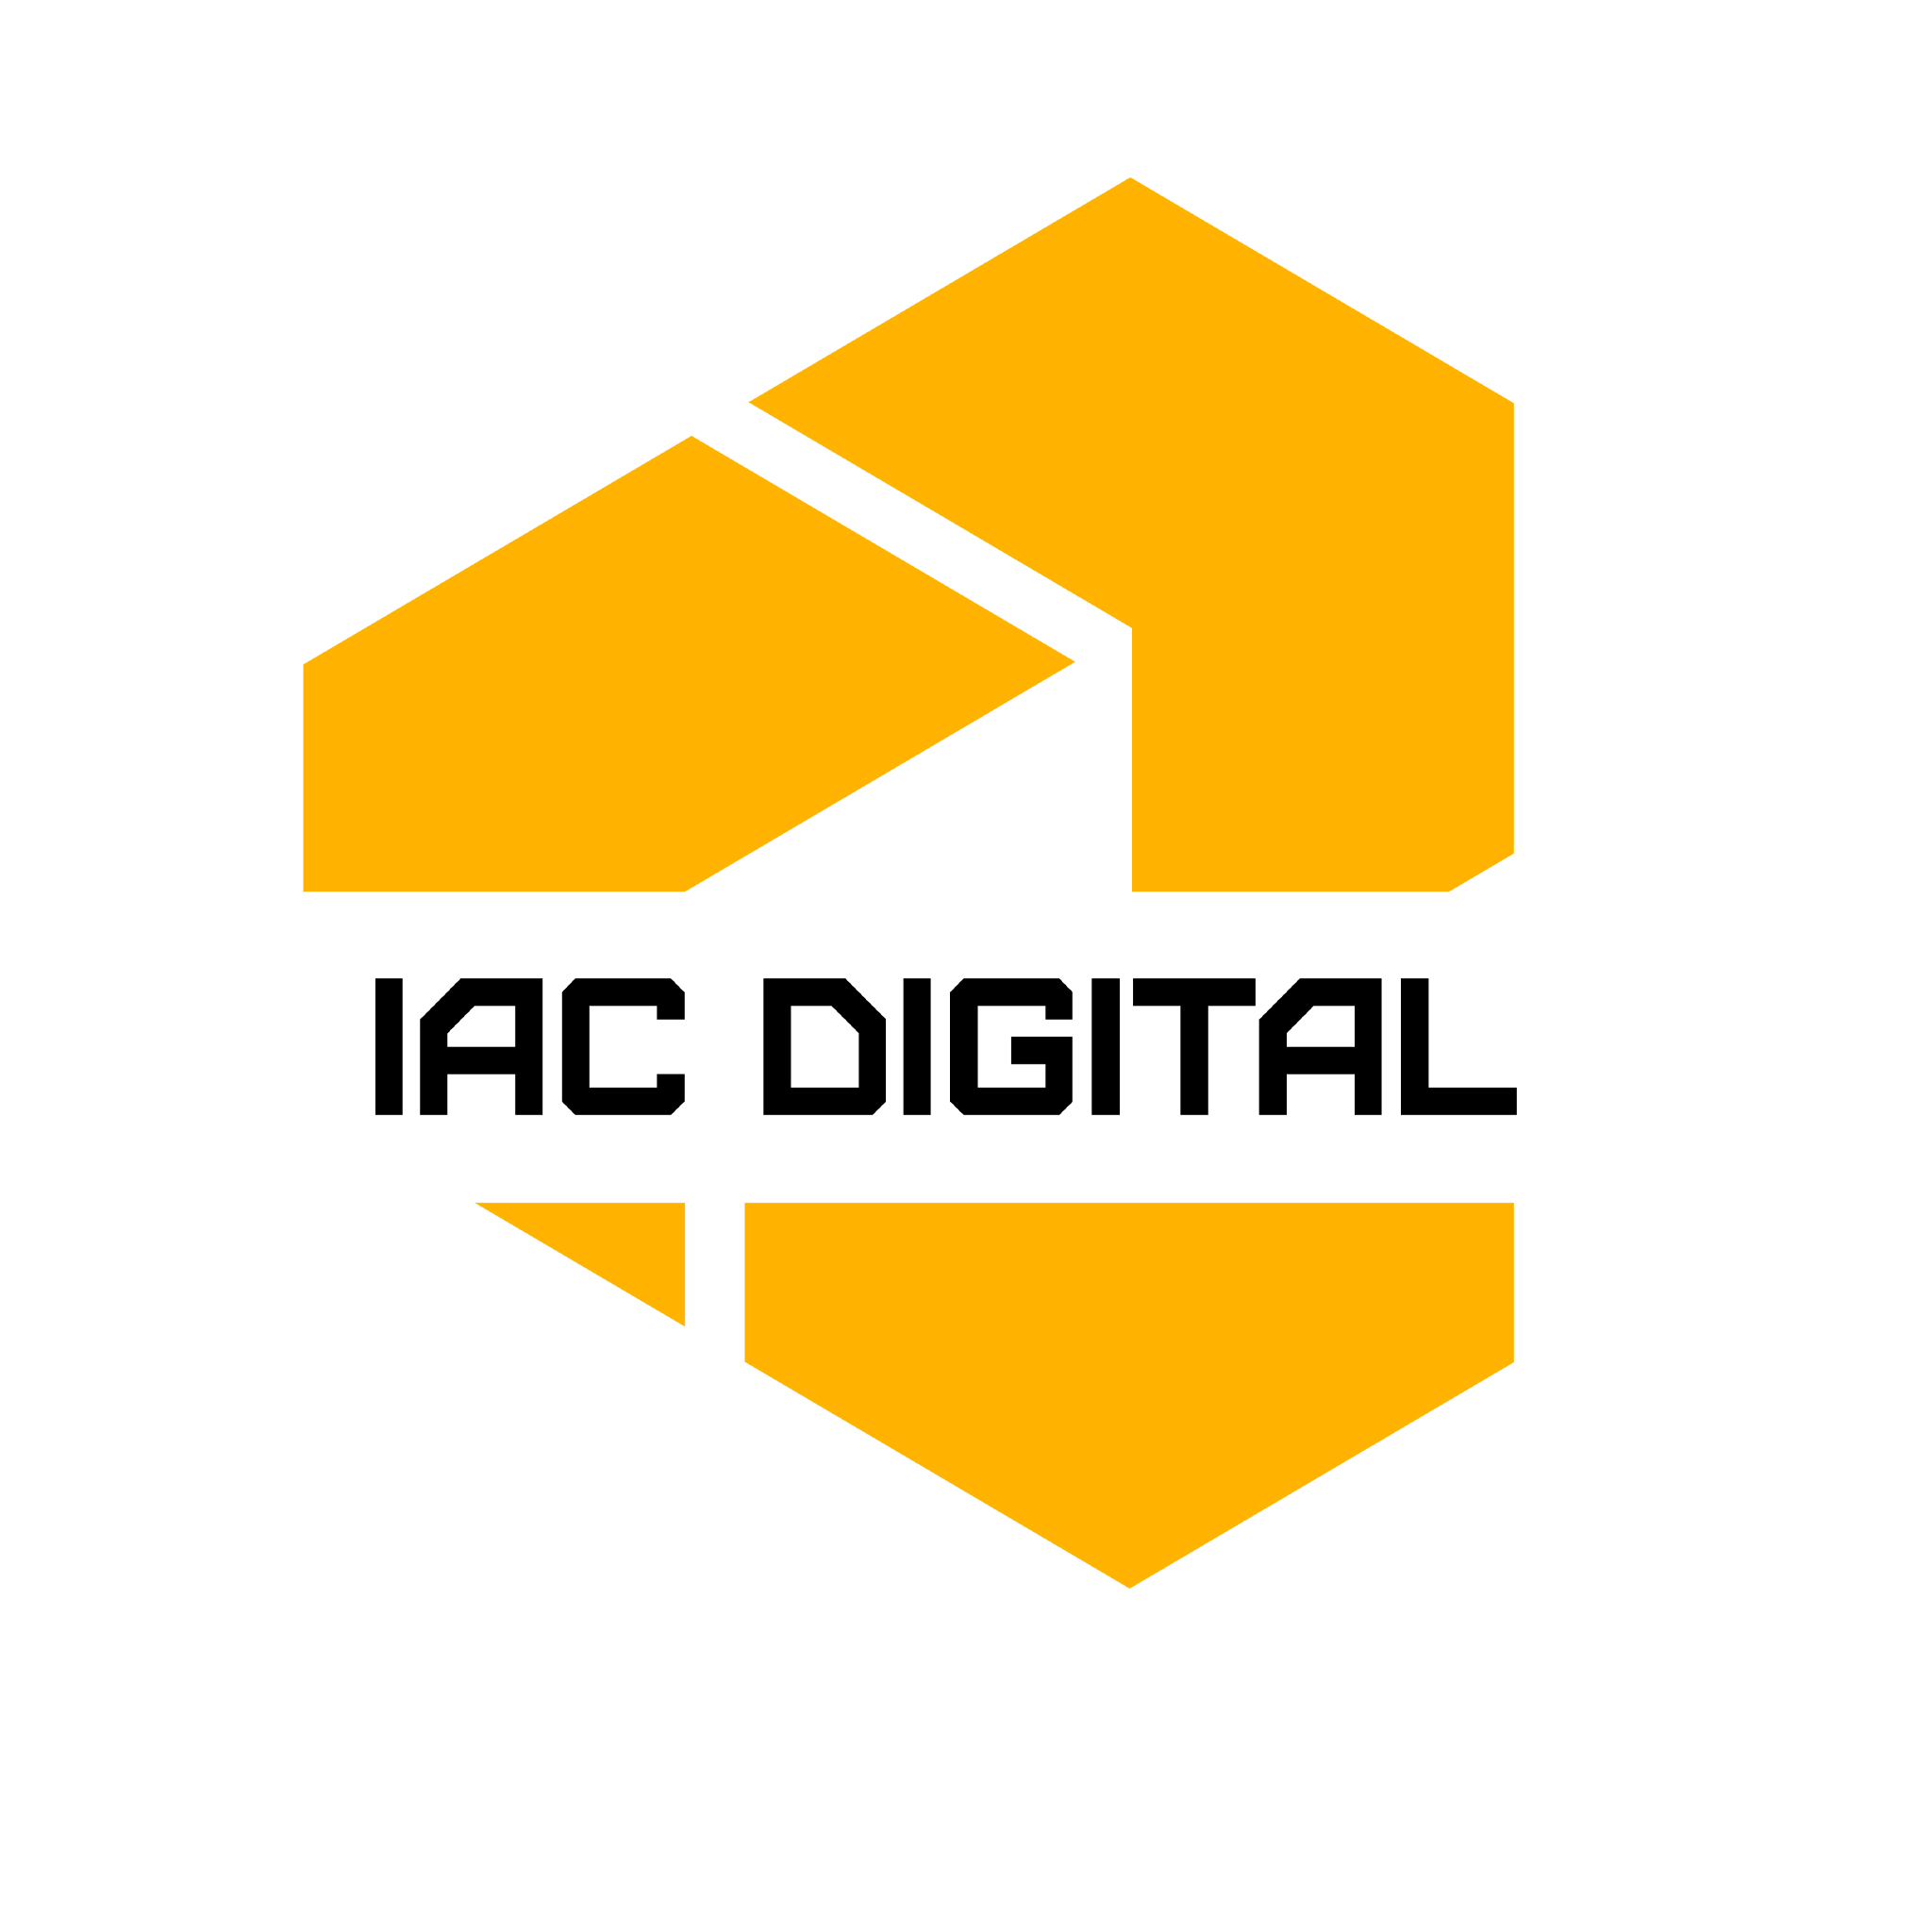 IAC  Digital (iac_digital)